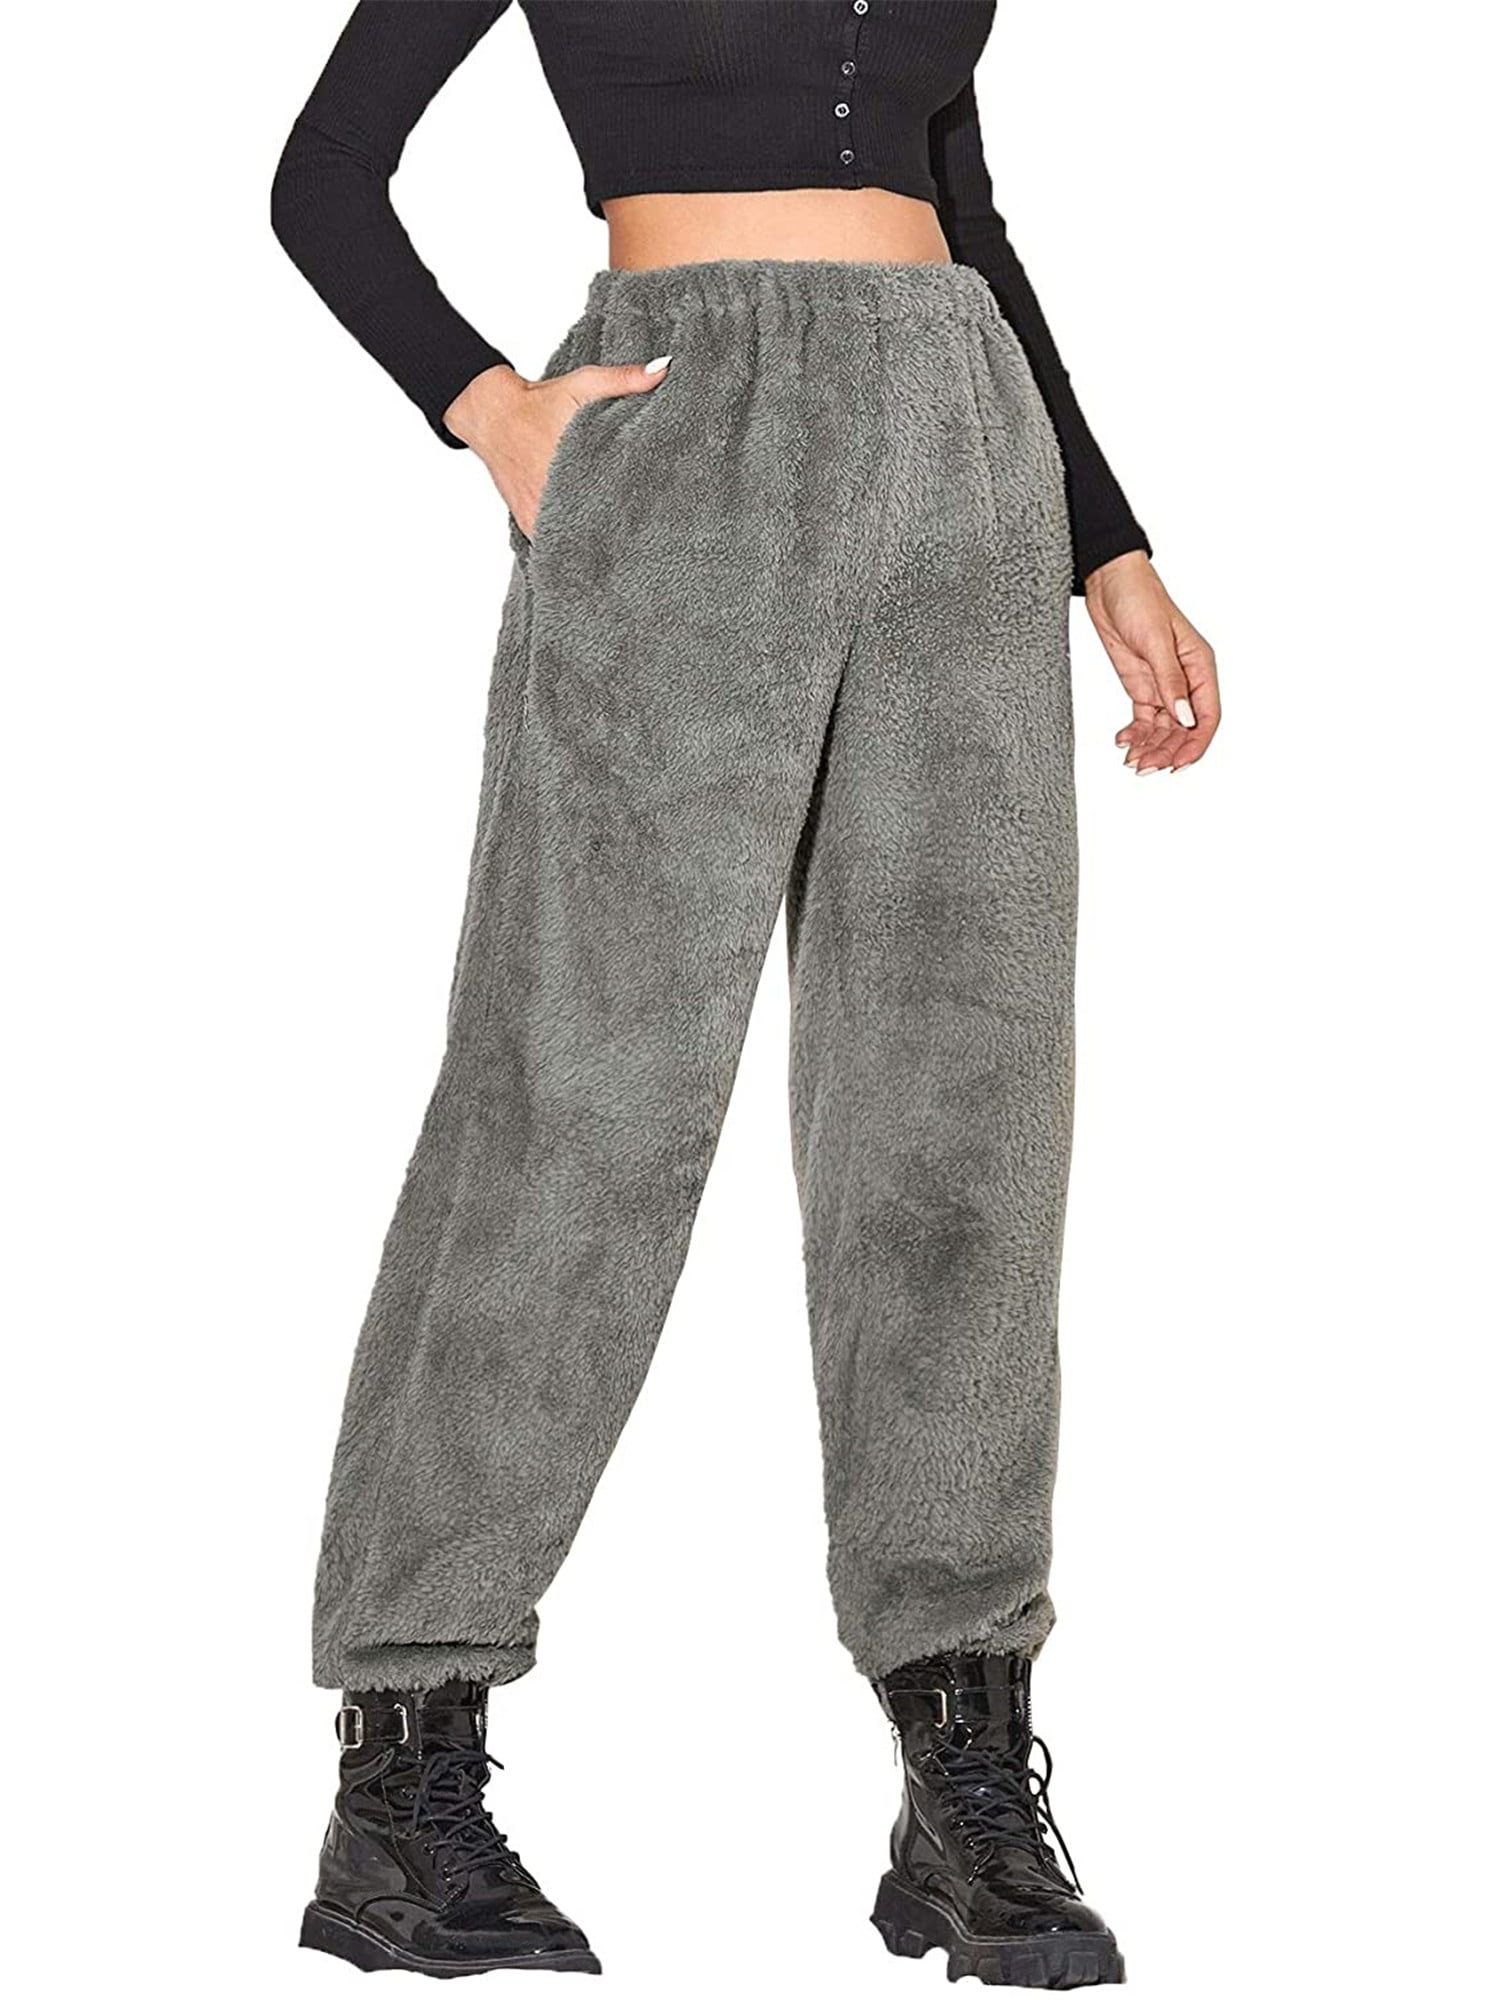 ReachMe Womens Winter Plush Fluffy Pajama Pants with Pockets Warm Fleece Lounge Pants Sleepwear Bottoms 